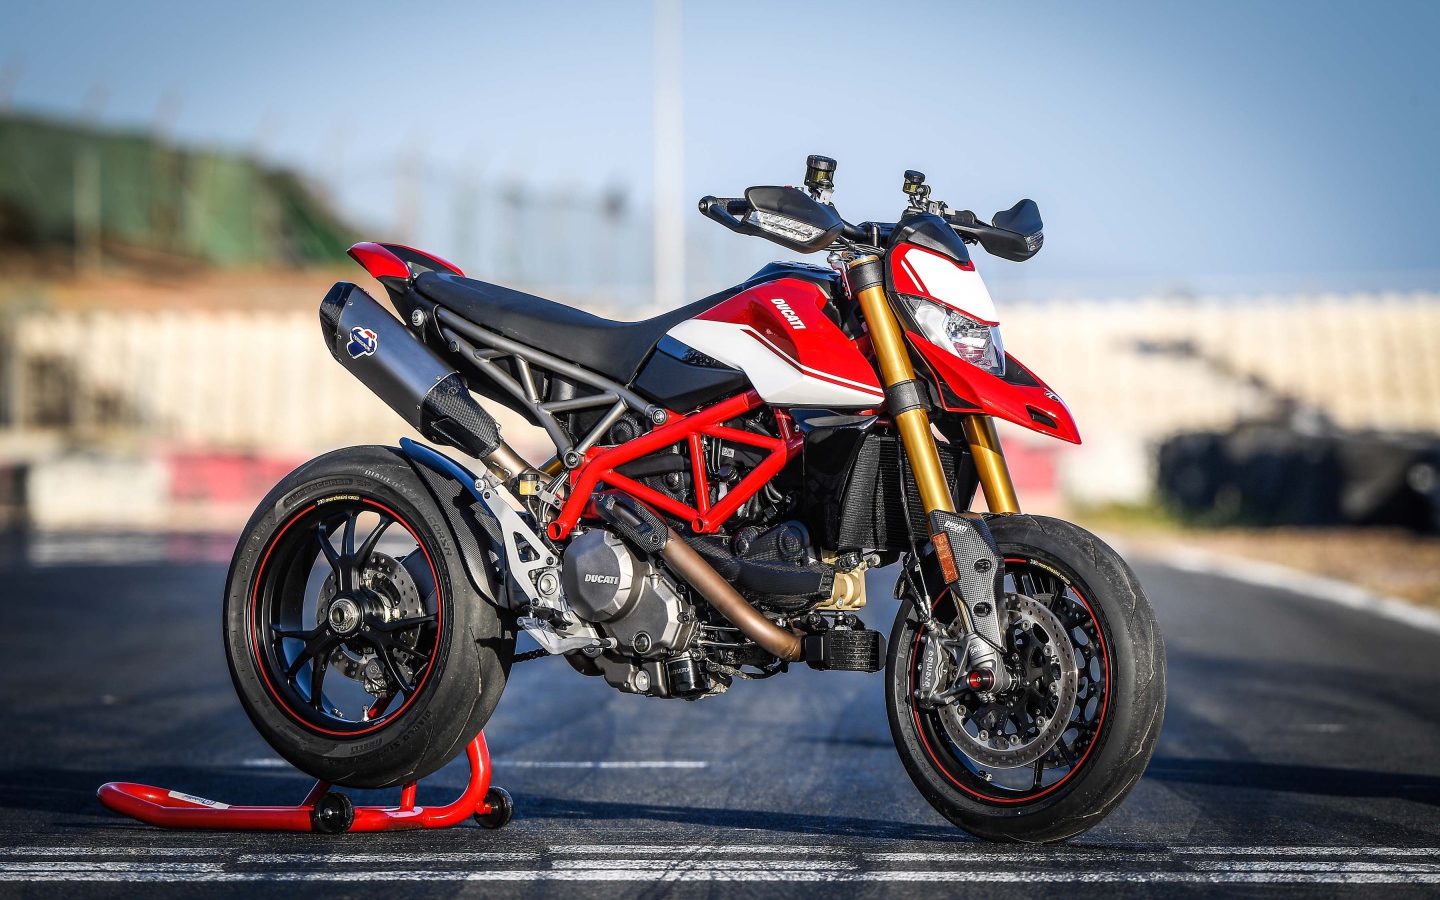 Мотоцикл Ducati Hypermotard 950 SP, 2019 года на асфальте